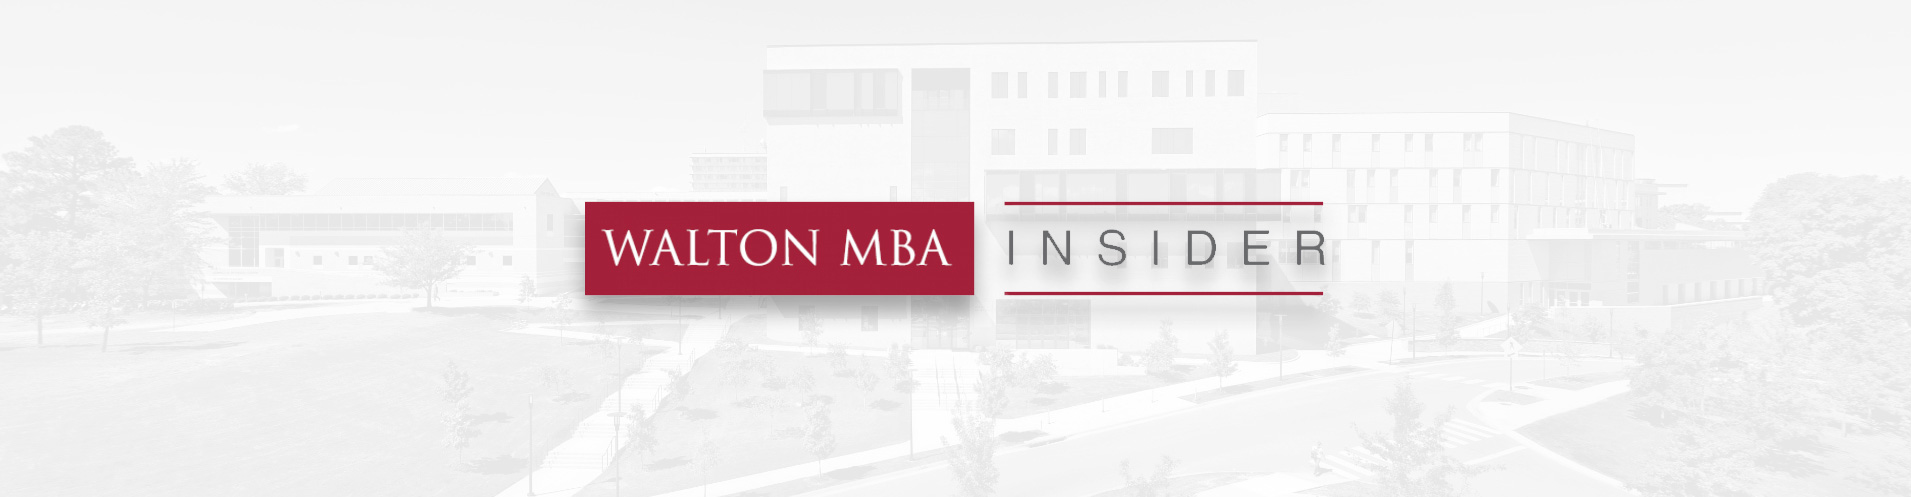 Walton MBA Insider